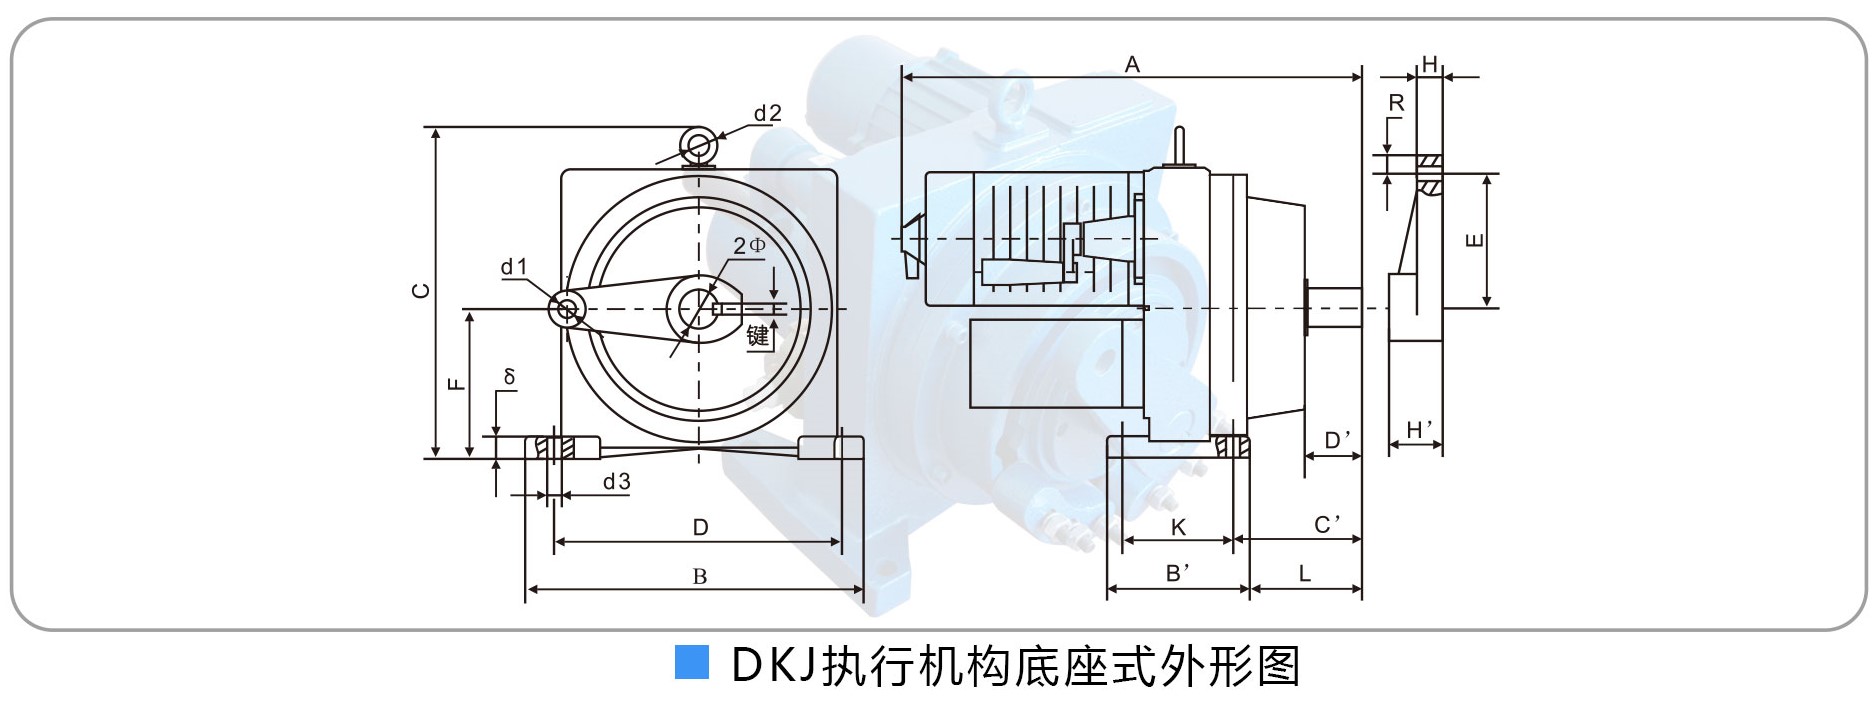 DKJ-6100A 2500Nm电动执行机构 电动执行机构,电动执行器,DKJ-6100A,球阀电动执行机构,DKJ电动执行机构